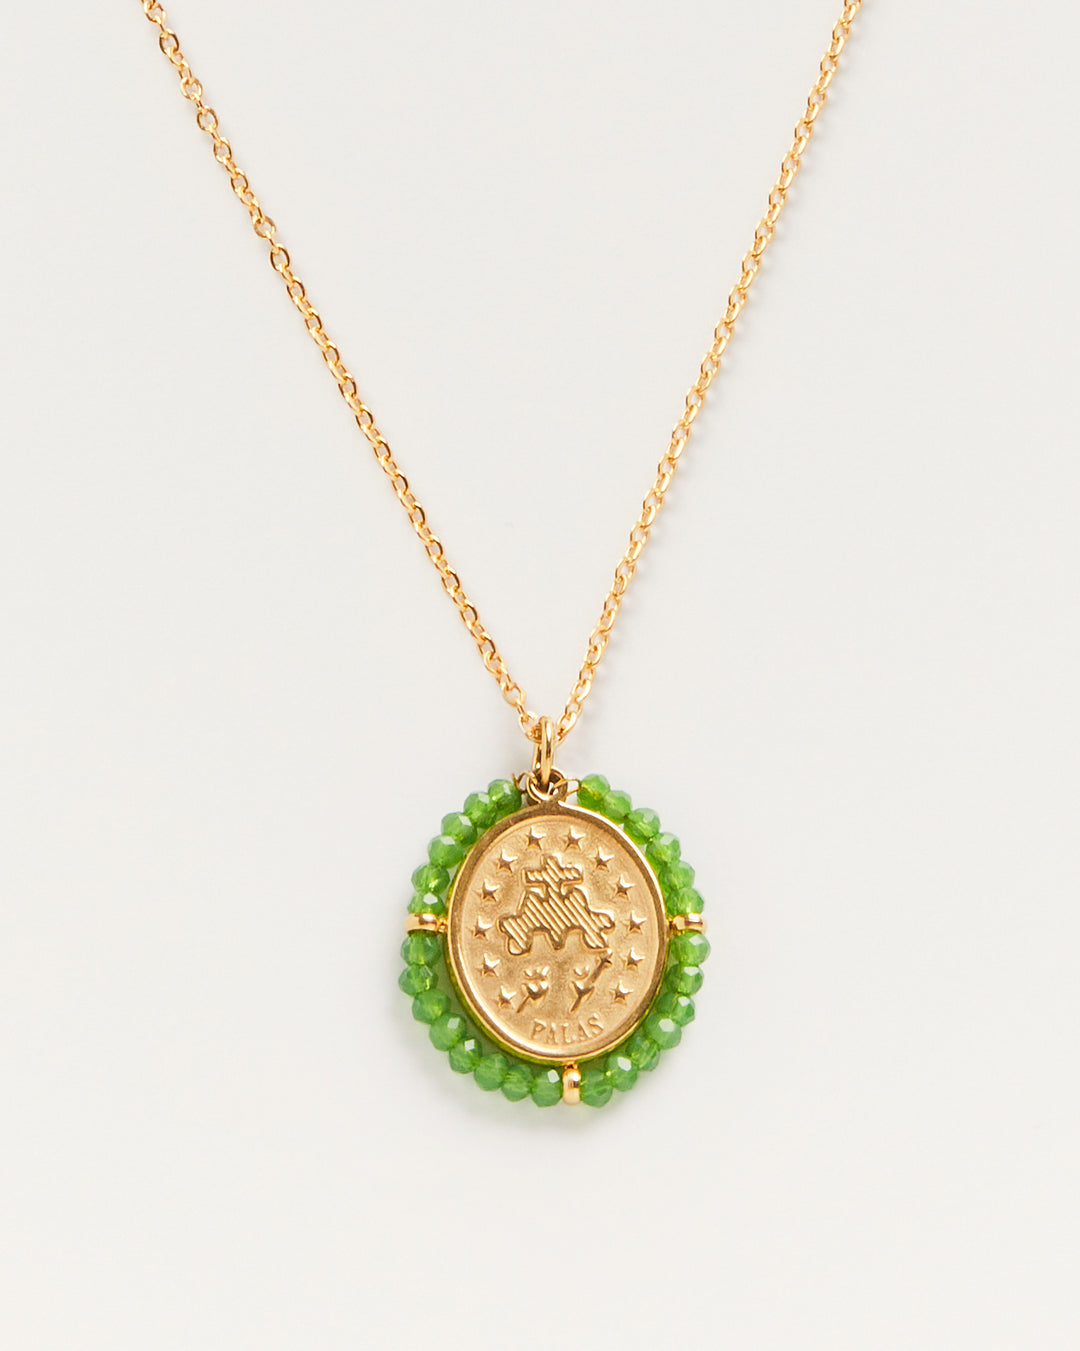 Santa Maria - Necklace Emerald Green - Palas